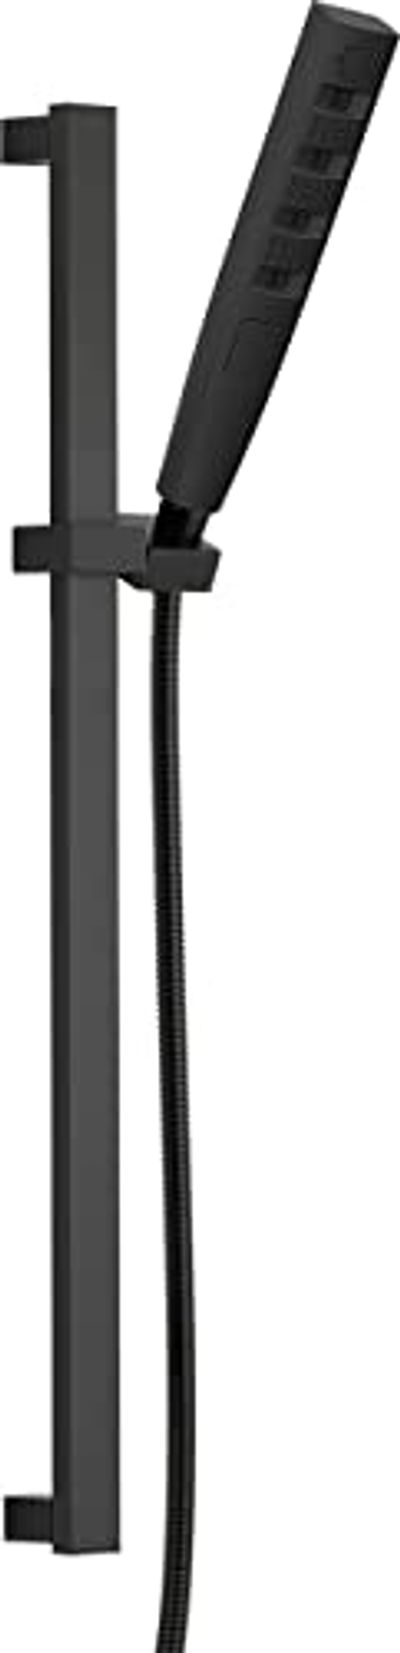 DELTA (FAUCETS) 5-Spray Touch-Clean H2Okinetic Slide Bar Hand Held Shower with Hose, Matte Black 51140-BL $259 (Reg $326.78)